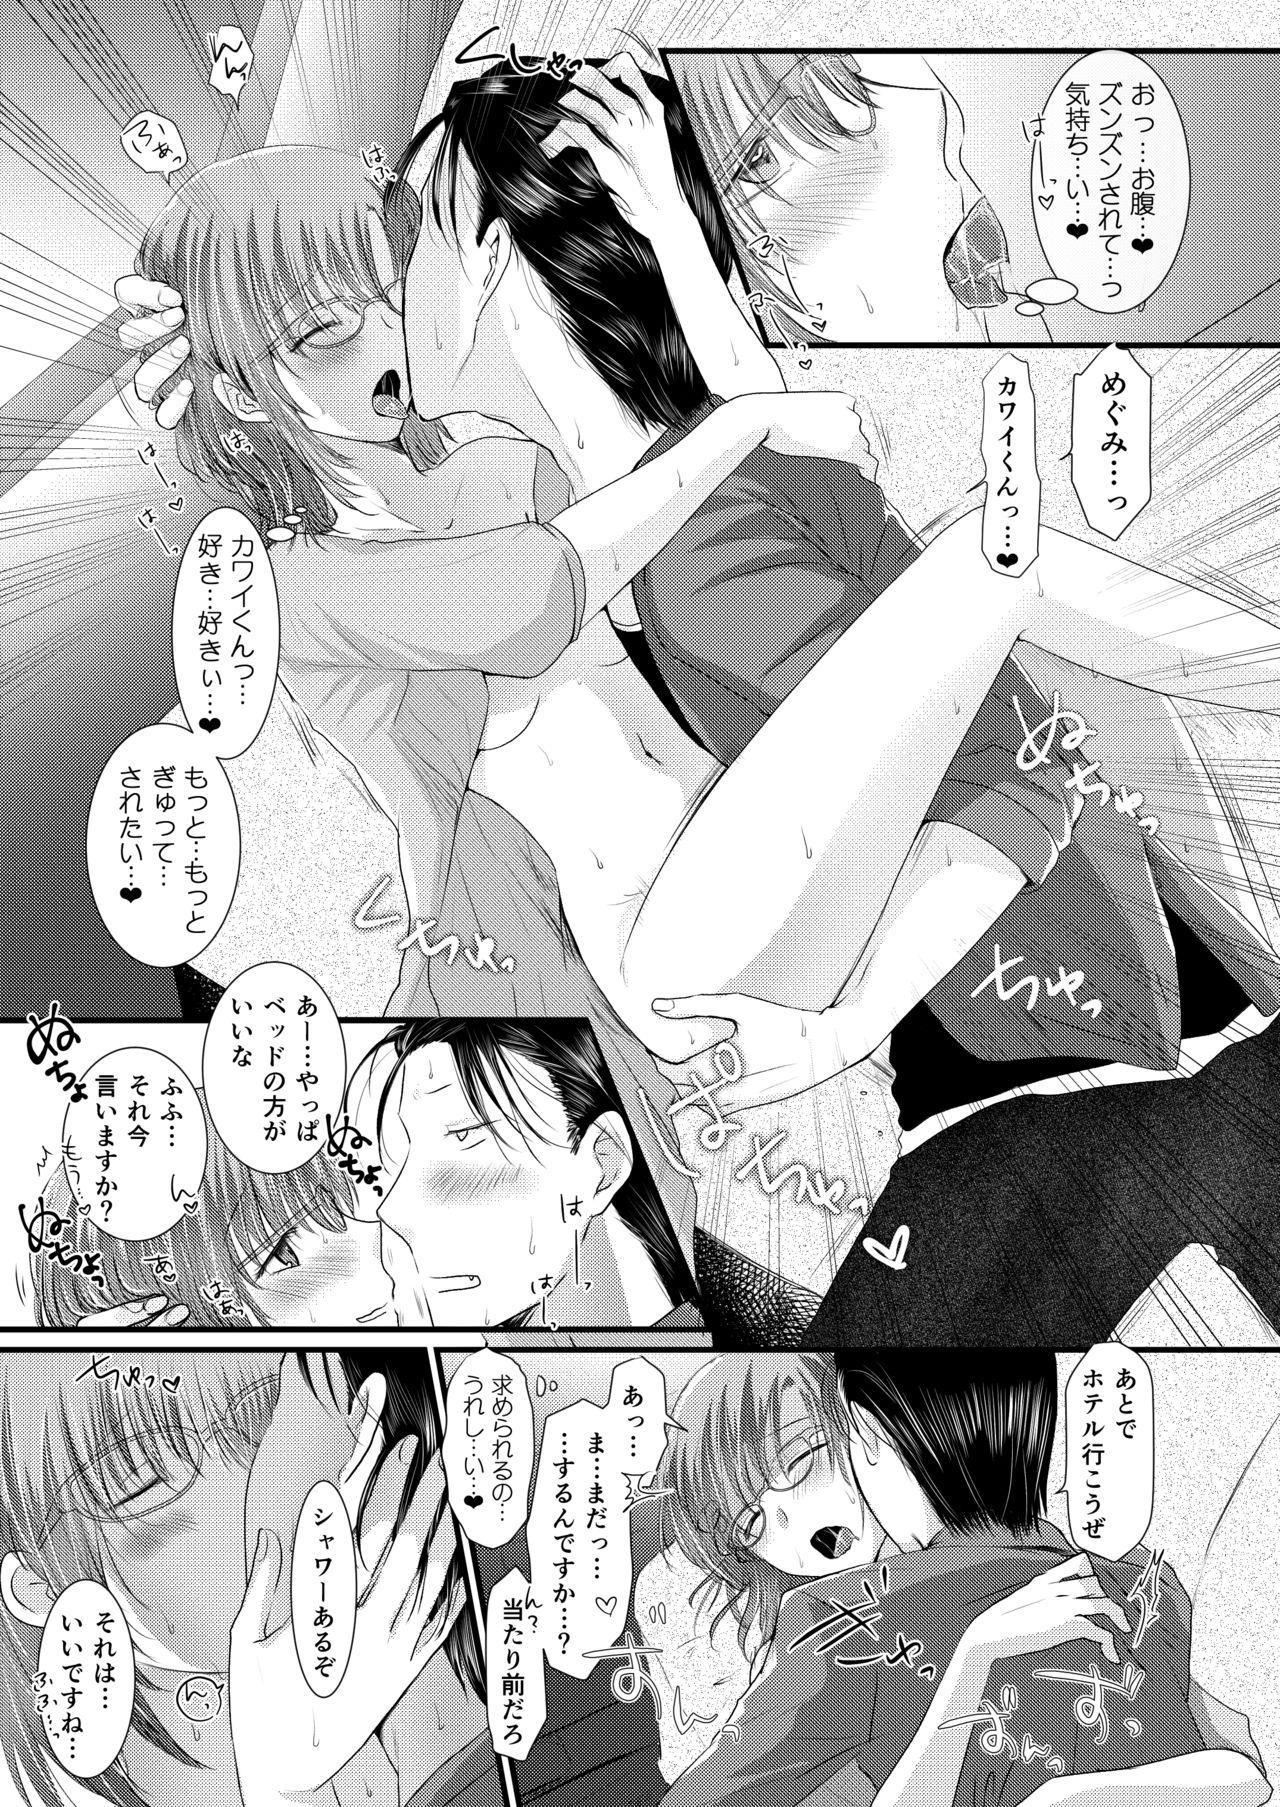 Seijin Muke Manga 16p 14